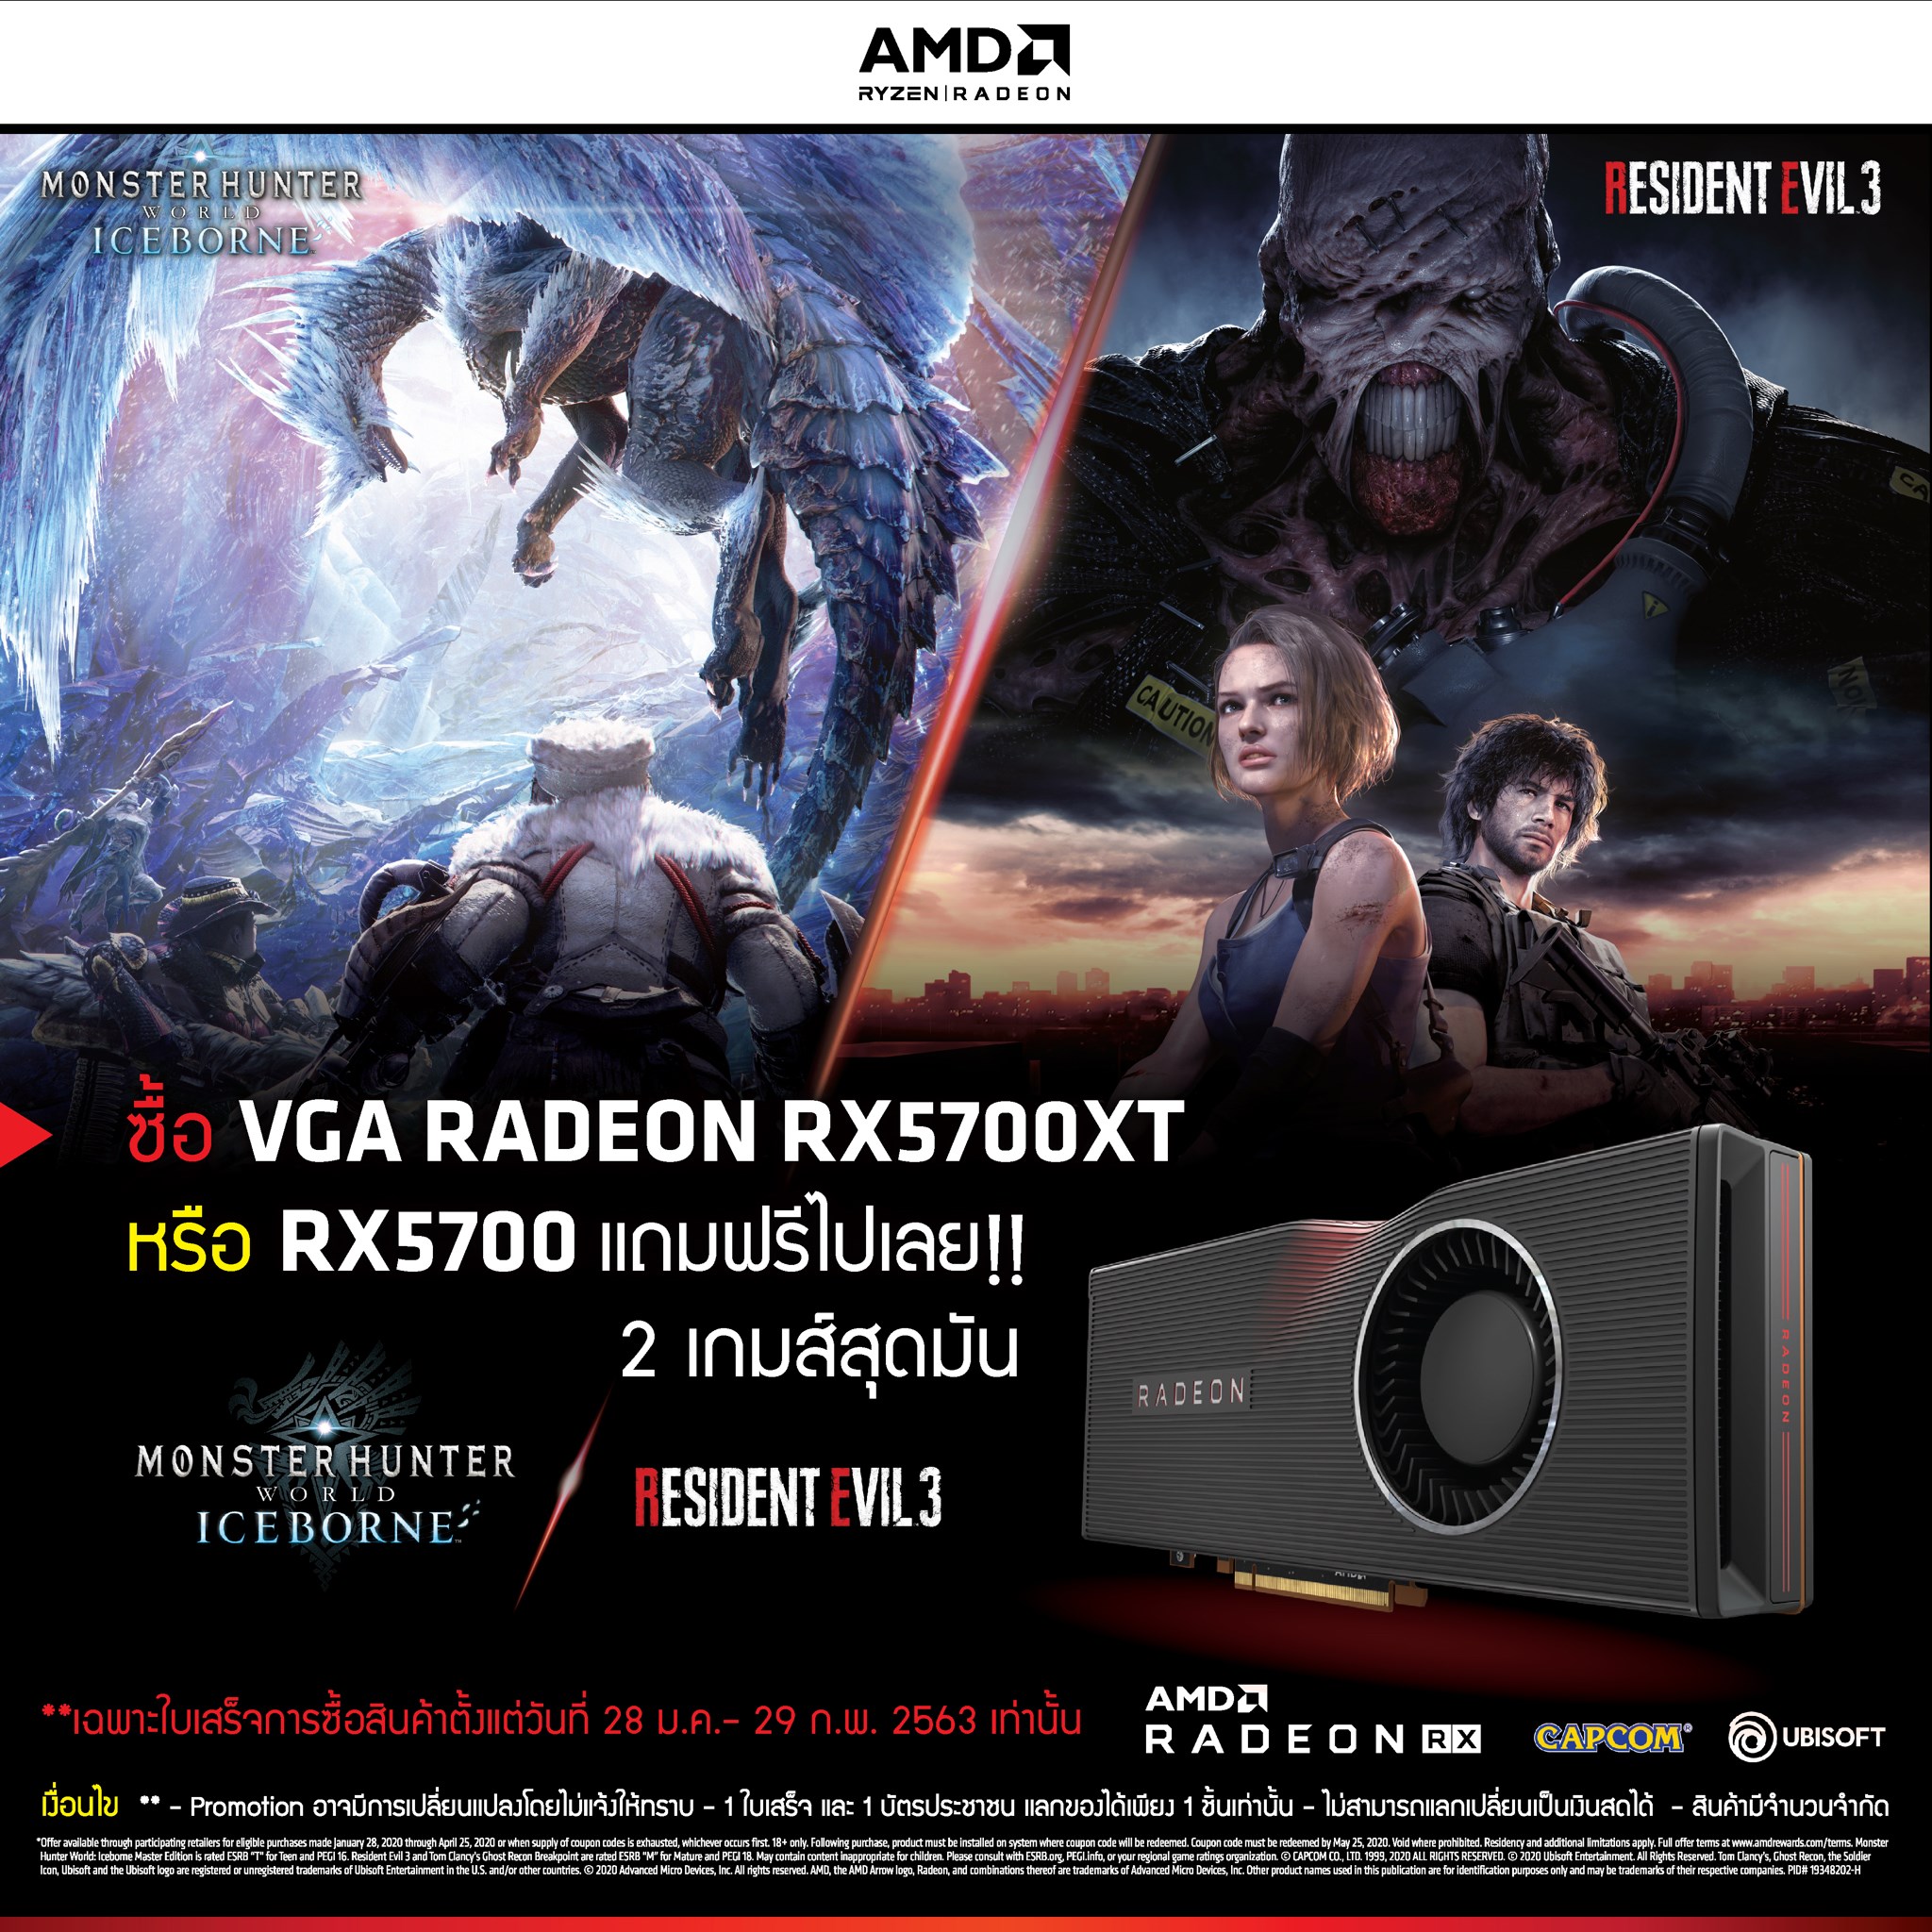 promotion 4 AMD มีโปรโมชั่นสำหรับ End user ที่ซื้อการ์ดจอที่ร่วมรายการ RX5500XT และ RX5700XT   RX 5700 ภายในวันที่ 1 กุมภาพันธ์   29 กุมภาพันธ์เป็นต้นไป แลกรับเกมสูงสุดถึง 3 เกมส์ อาทิเช่น Ghost recon breakpoint , Monster Hunter world   Icebone   Resident Evil 3